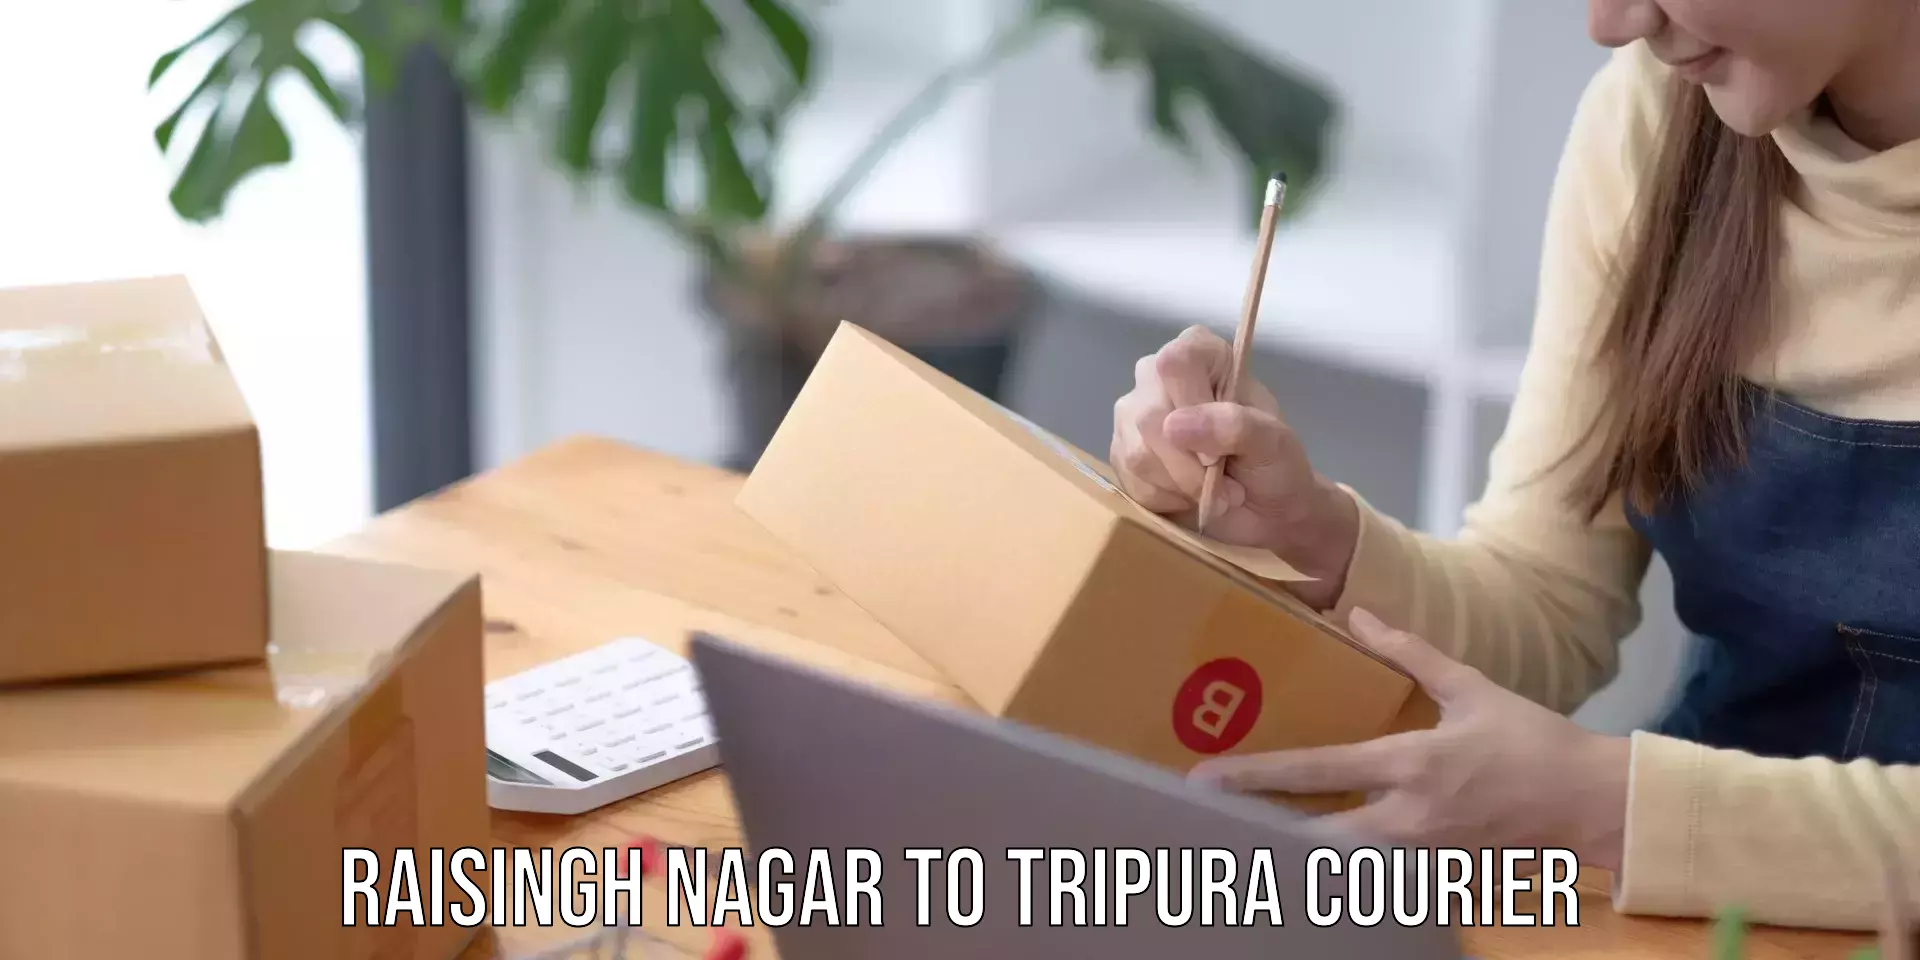 Professional courier services Raisingh Nagar to Tripura